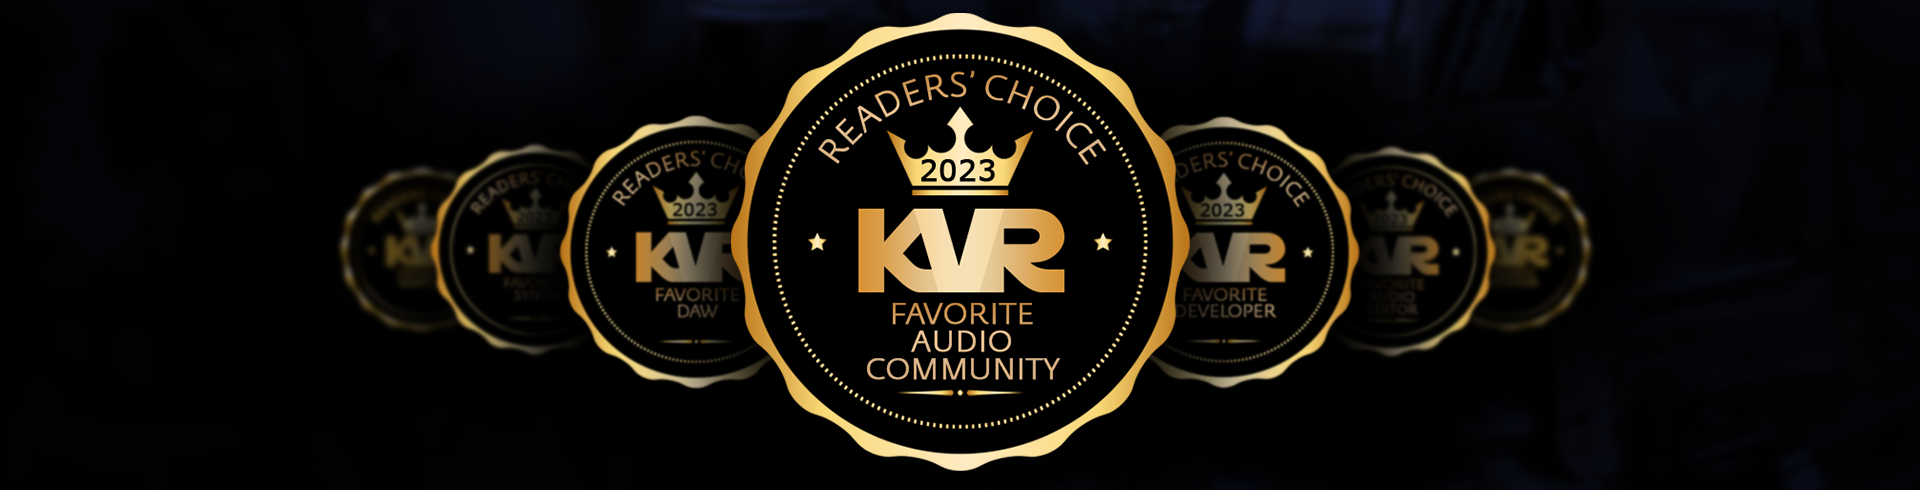 KVR Readers' Choice Awards 2023: Voting has begun